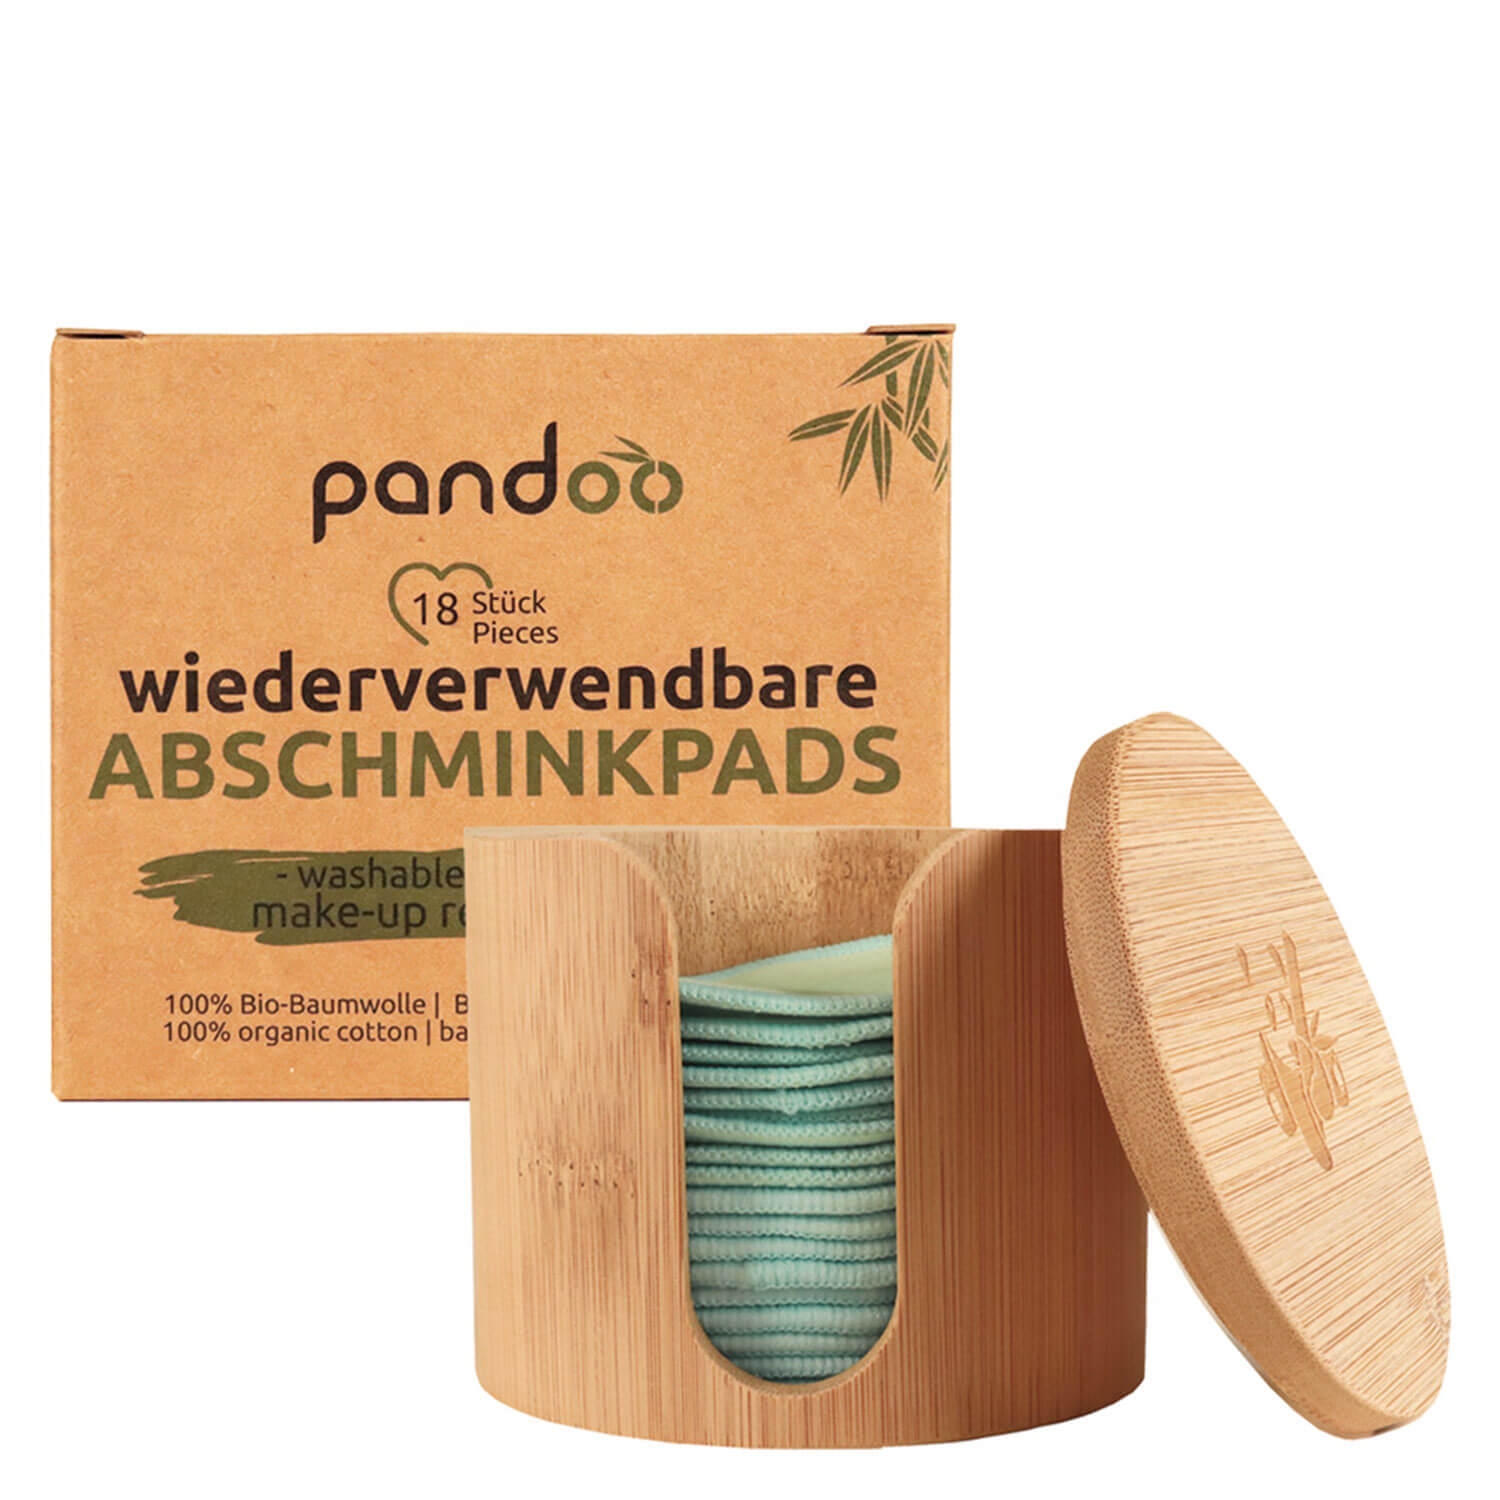 Product image from pandoo - Bio-Baumwolle Abschminkpads